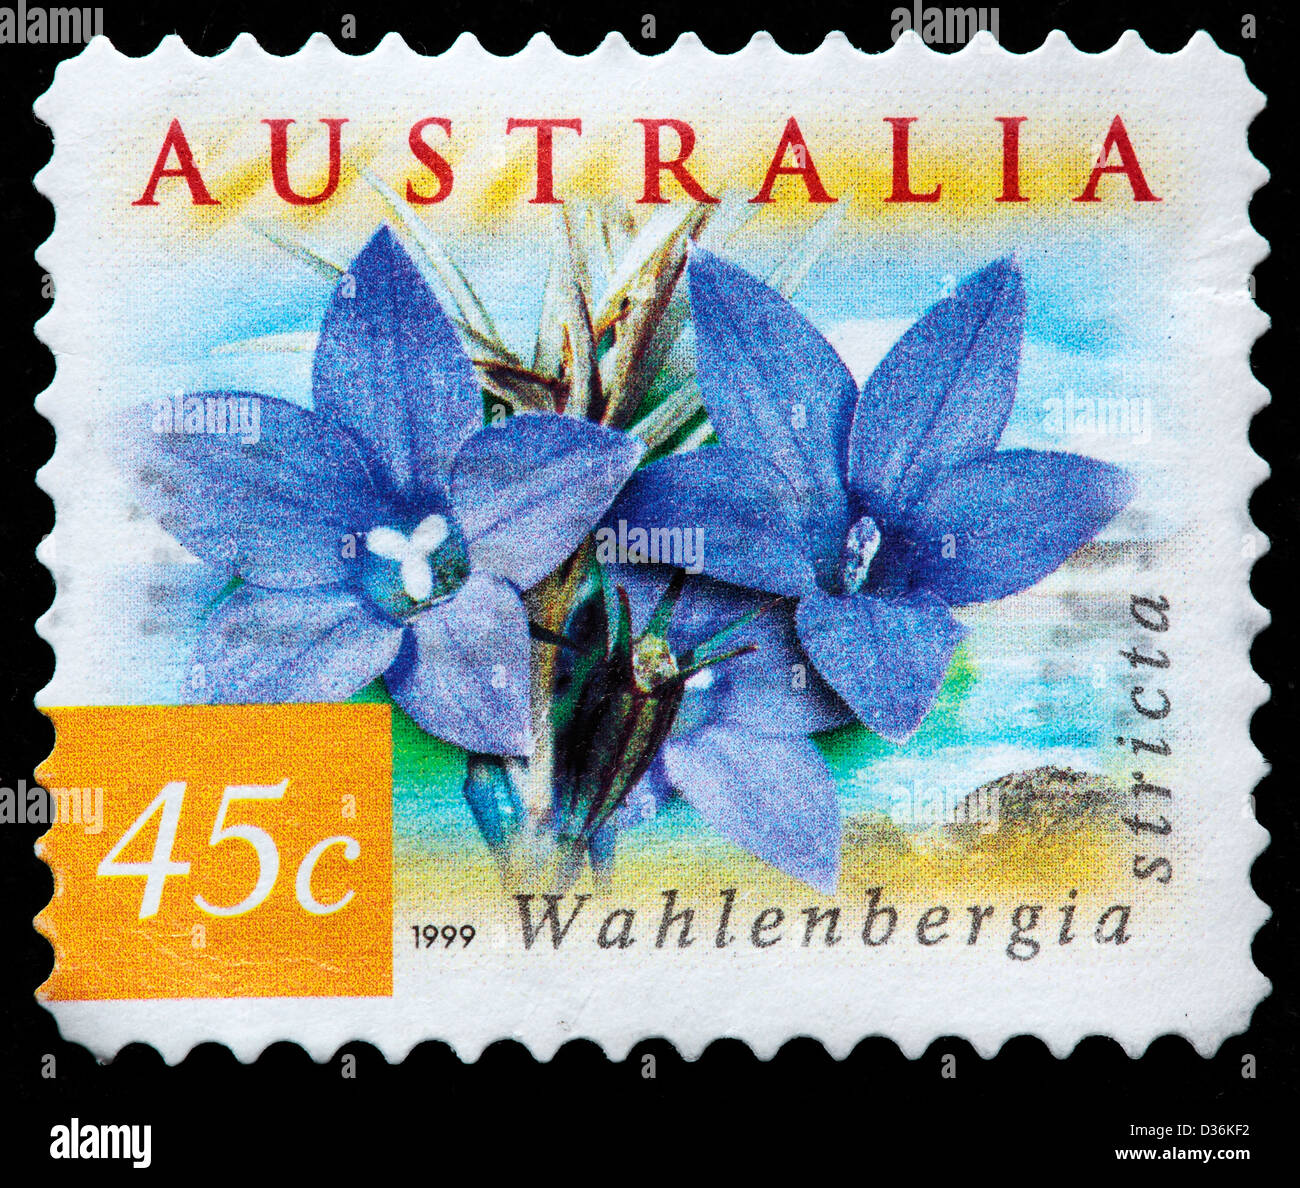 Wahlenbergia stricta, postage stamp, Australia, 1999 Stock Photo